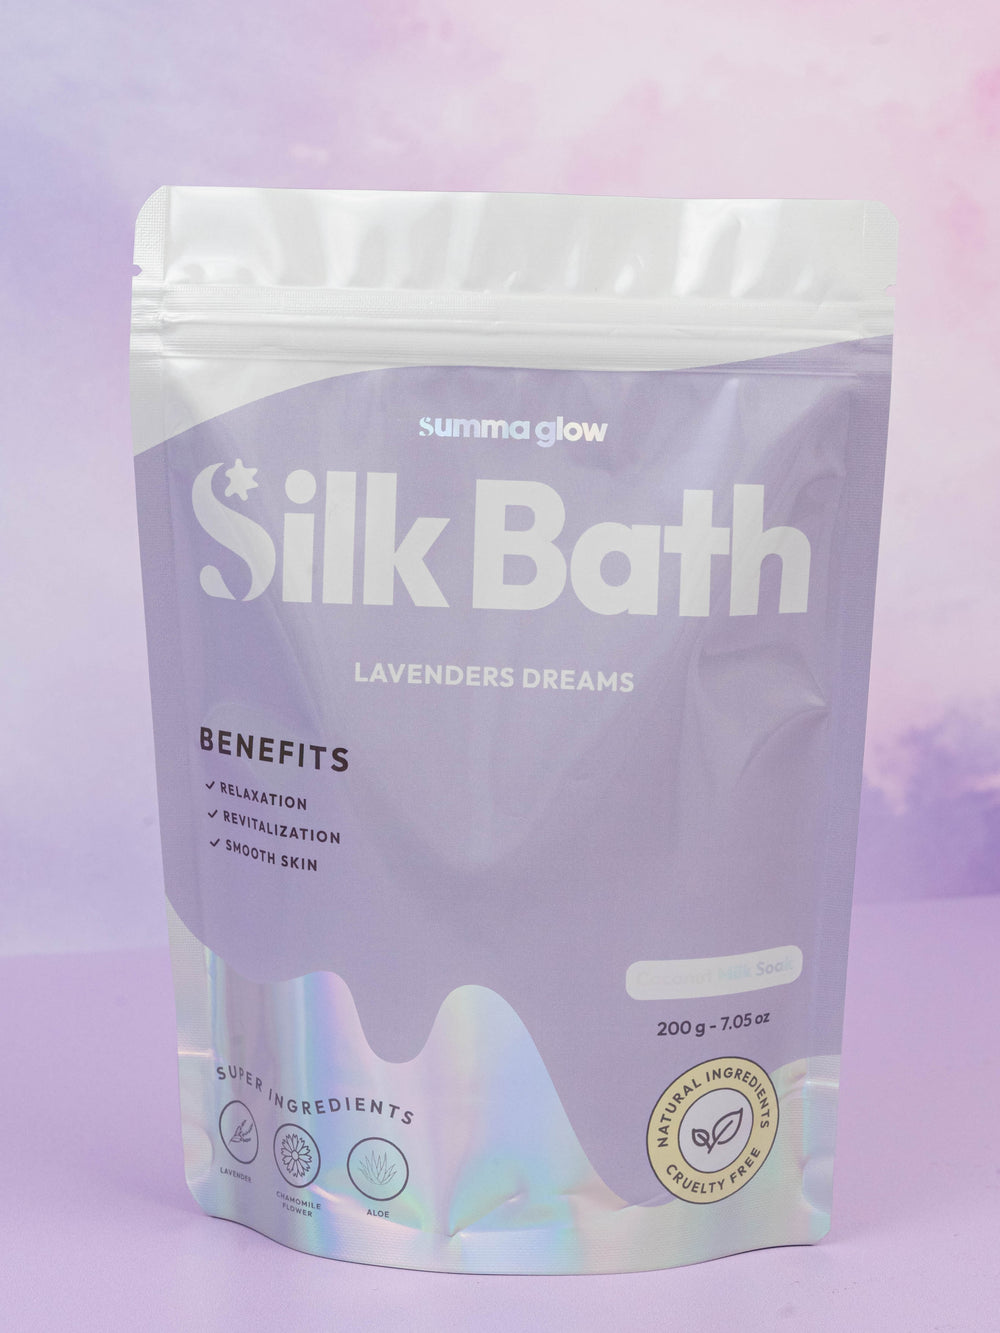 Silk Milk Lavenders Dream - Summa Skin Co